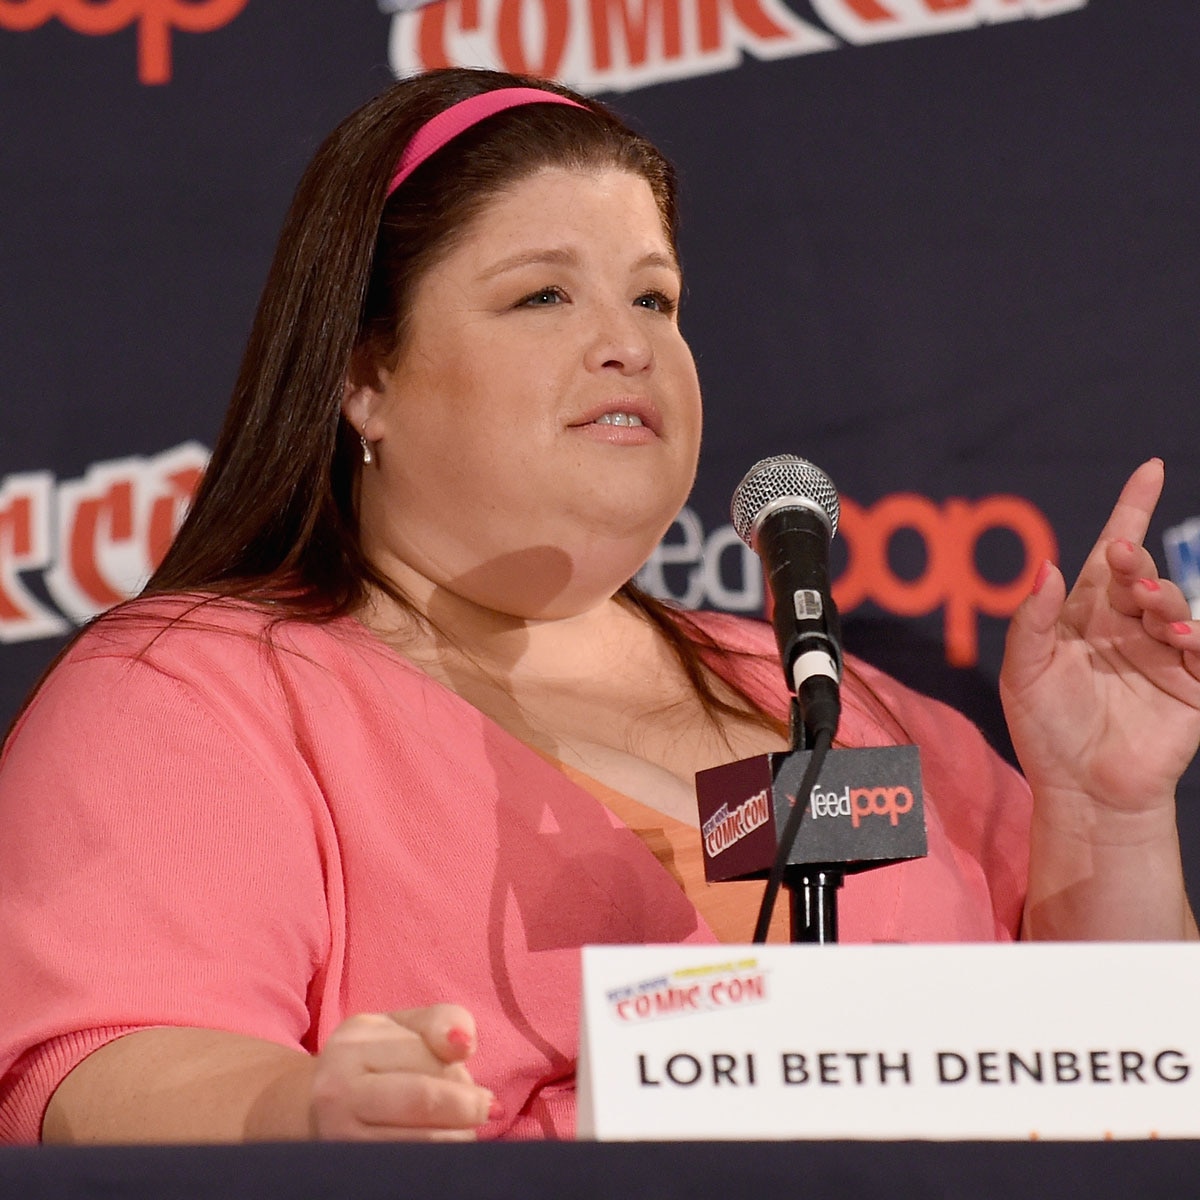 Dan Schneider Reacts After Lori Beth Denberg Says He "Preyed" on Her